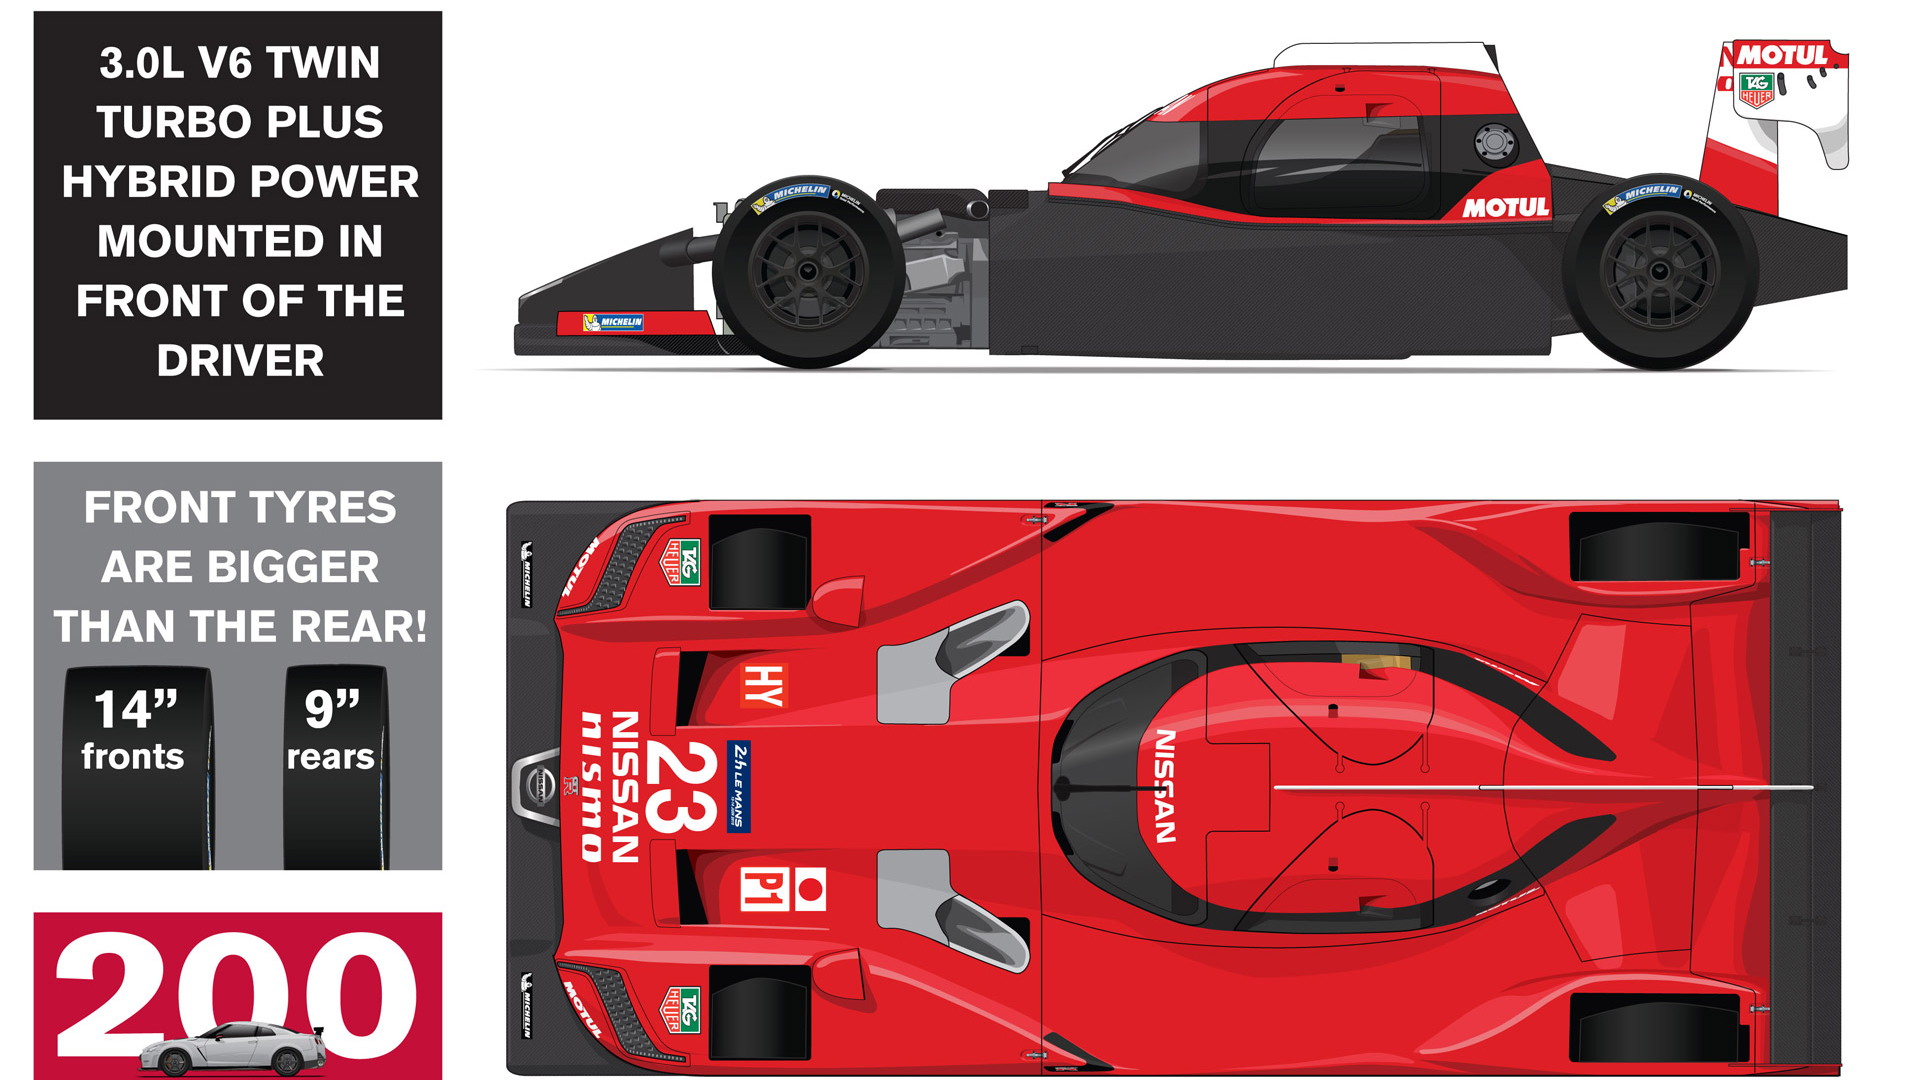 2015 Nissan GT-R LM NISMO LMP1 race car